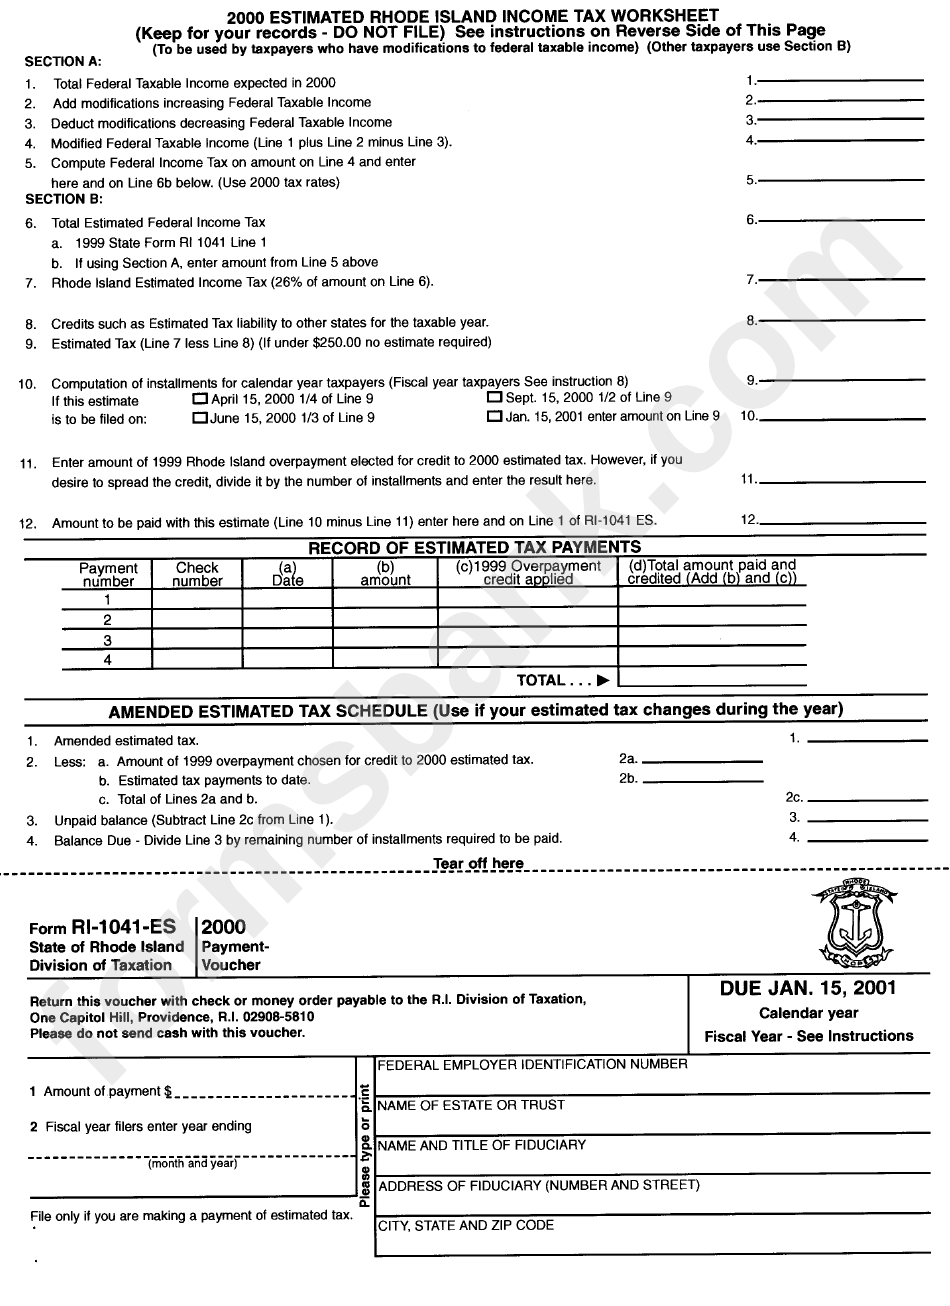 Form Ri-1041 Es - Rhode Island Estimated Income Tax Estates And Trusts - 2000